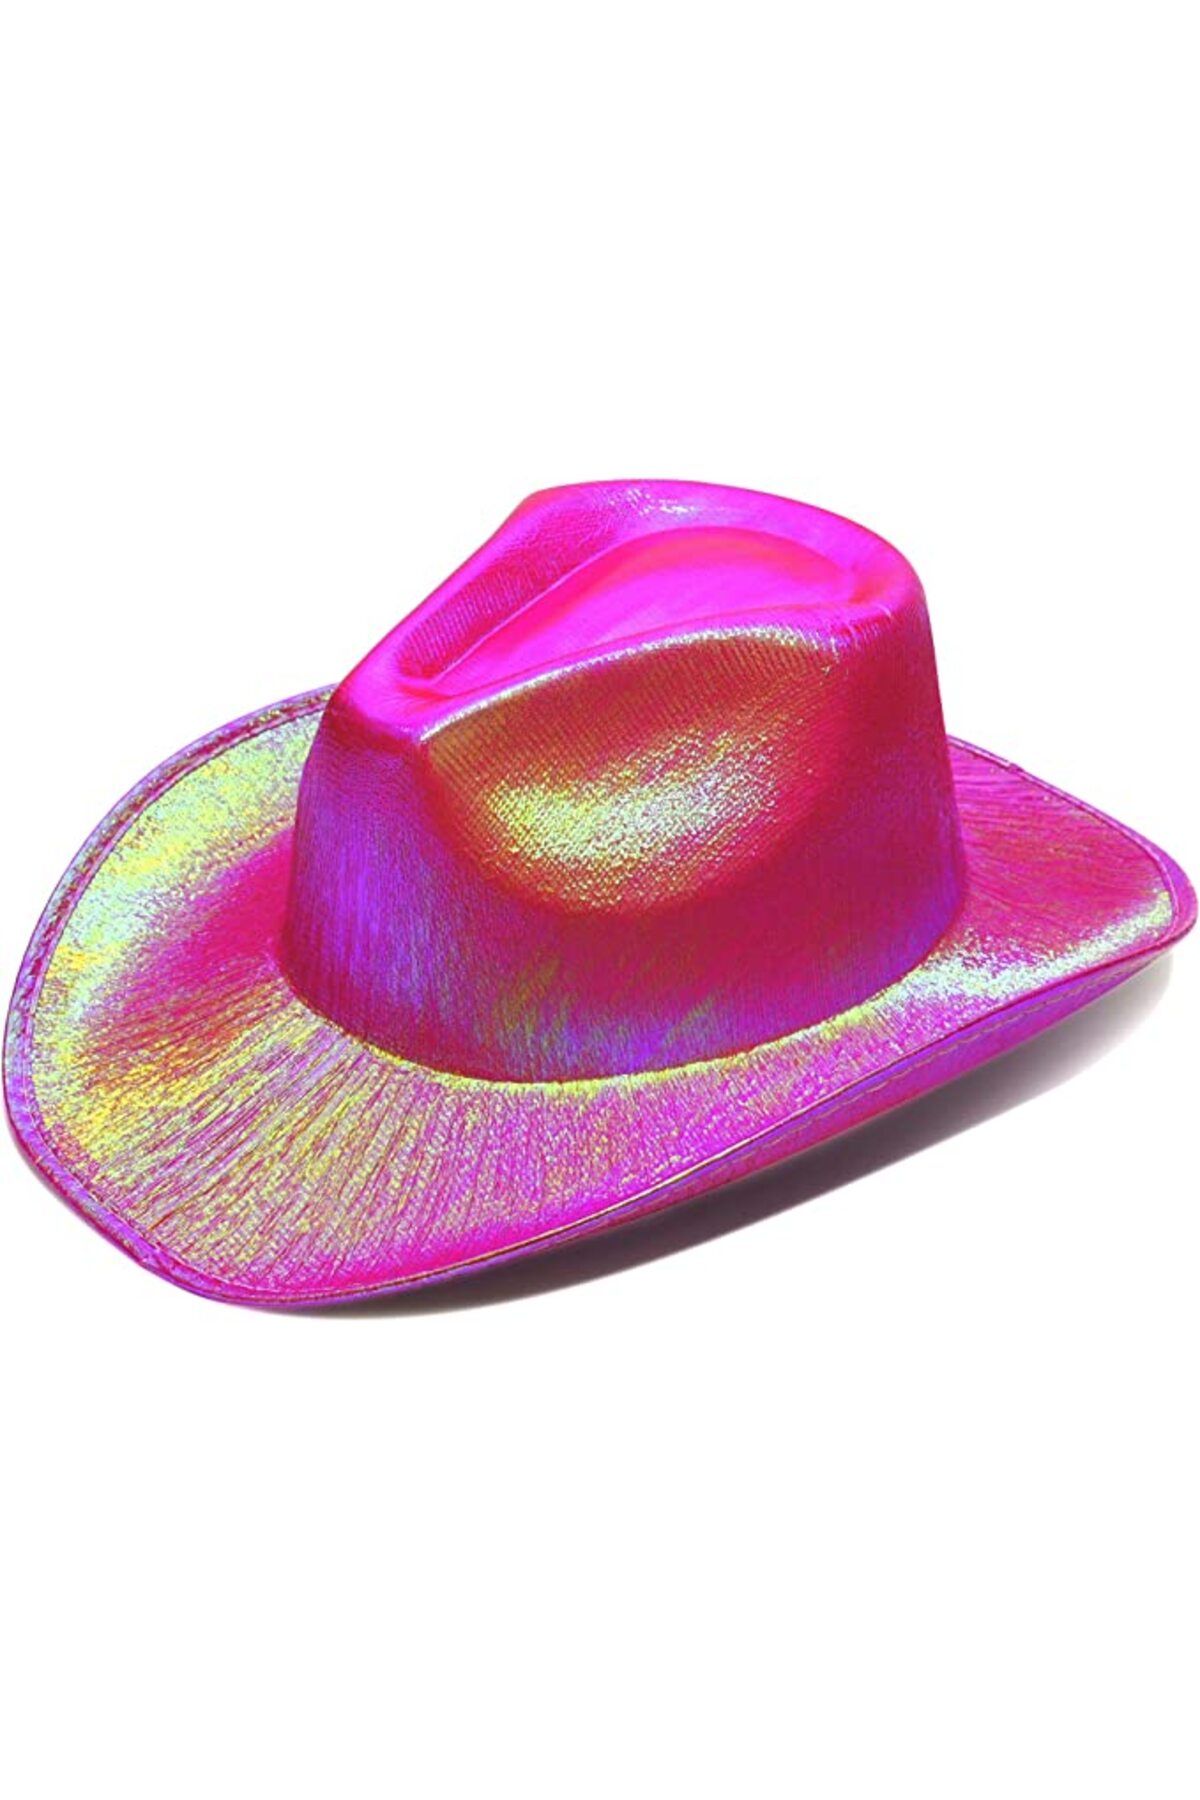 Genel Markalar CLZ192 Neon Hologramlı Kovboy Model Parti Şapkası Fuşya Yetişkin 39X36X14 cm (4172)